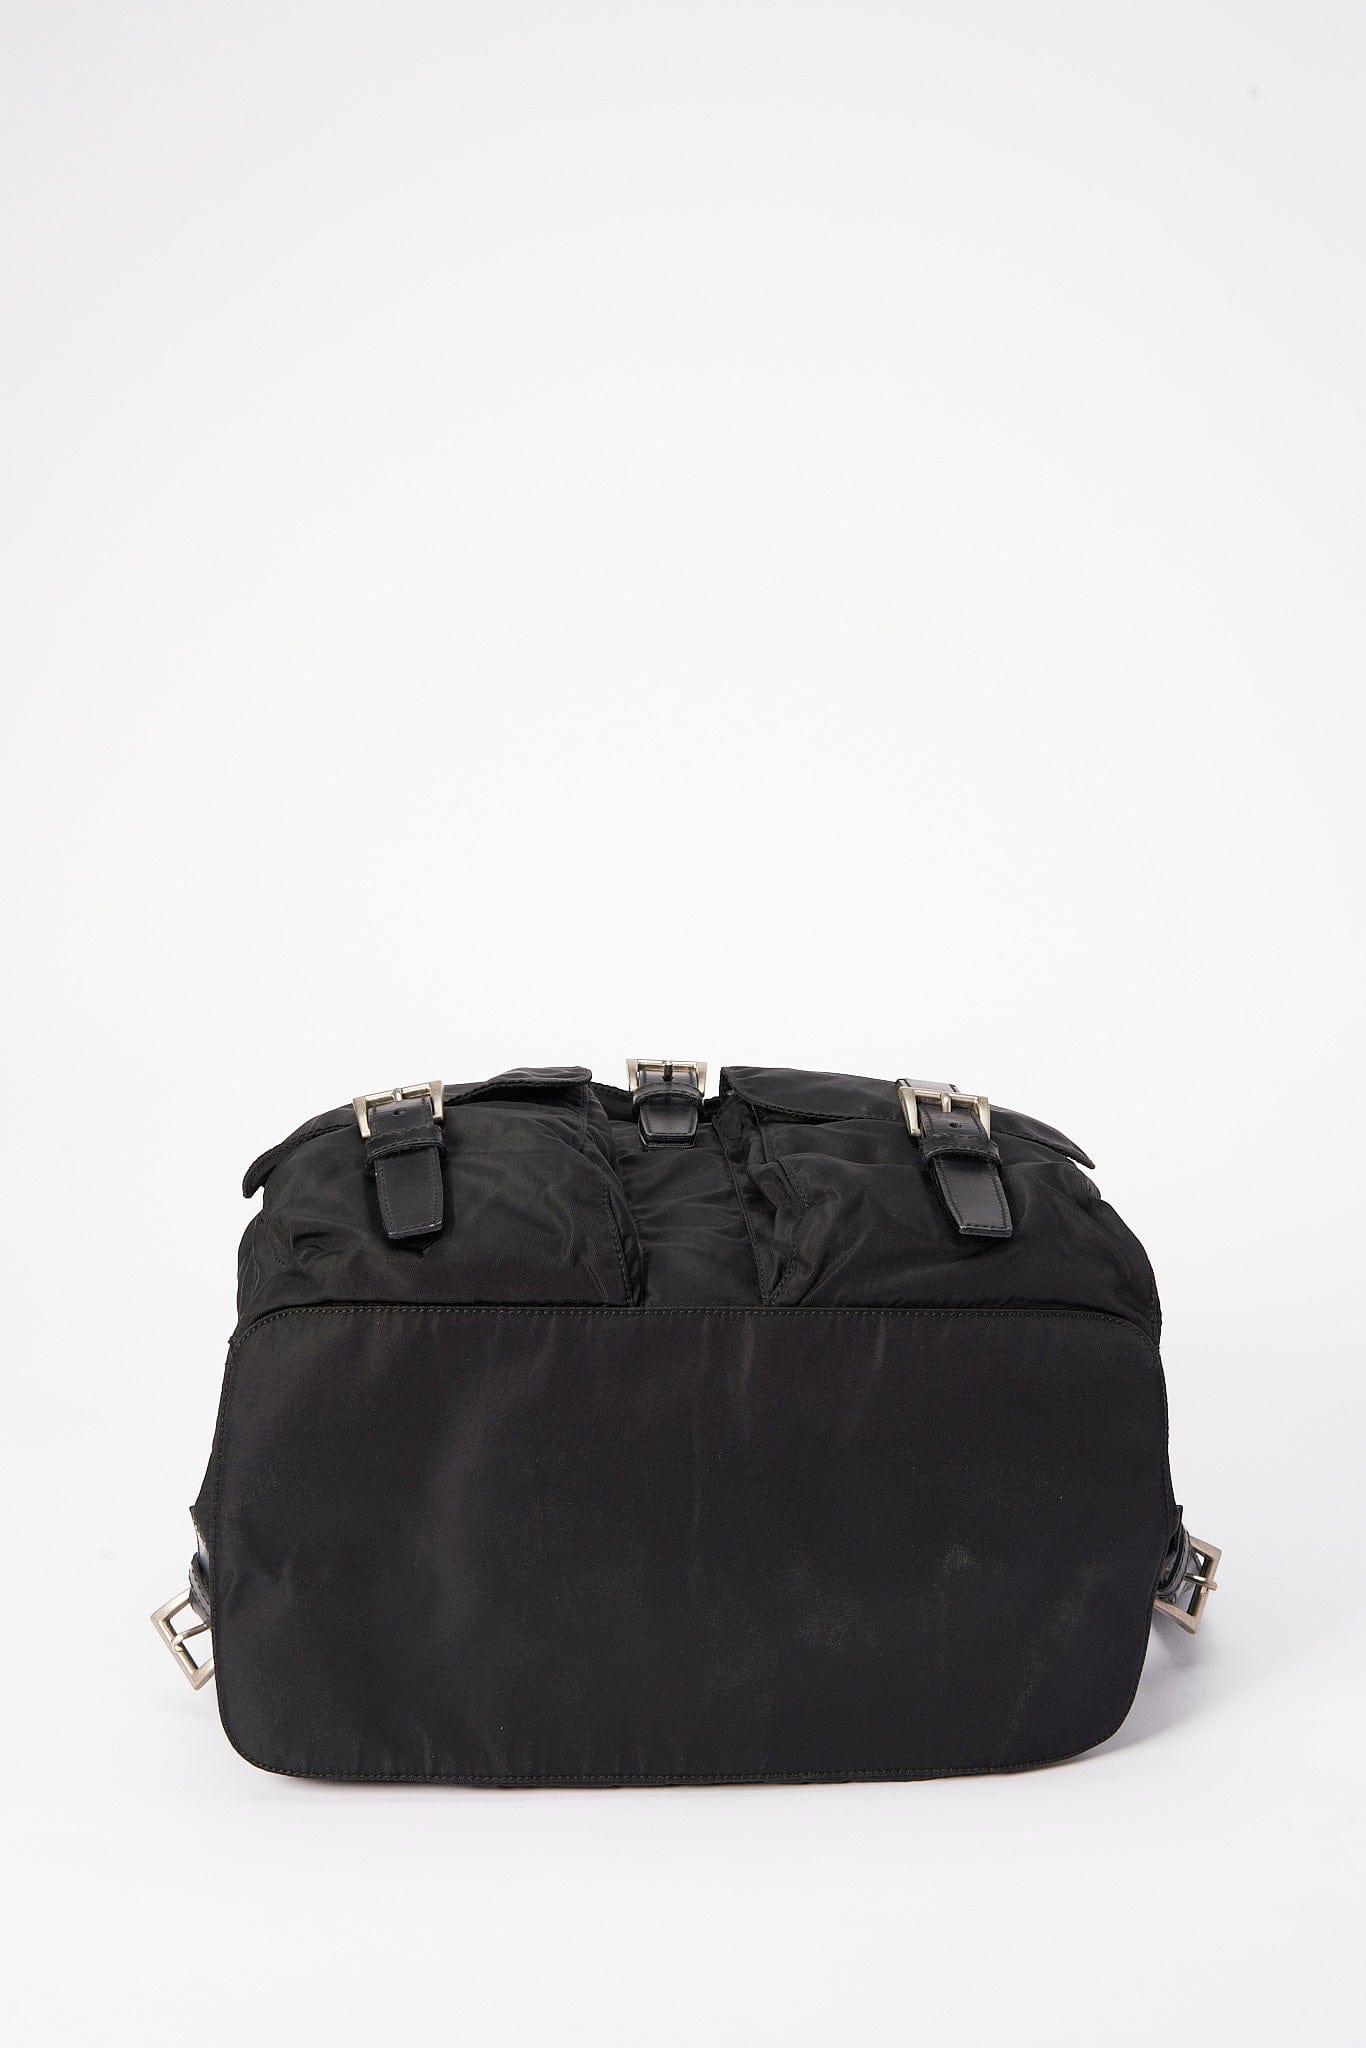 Prada Black Nylon Backpack